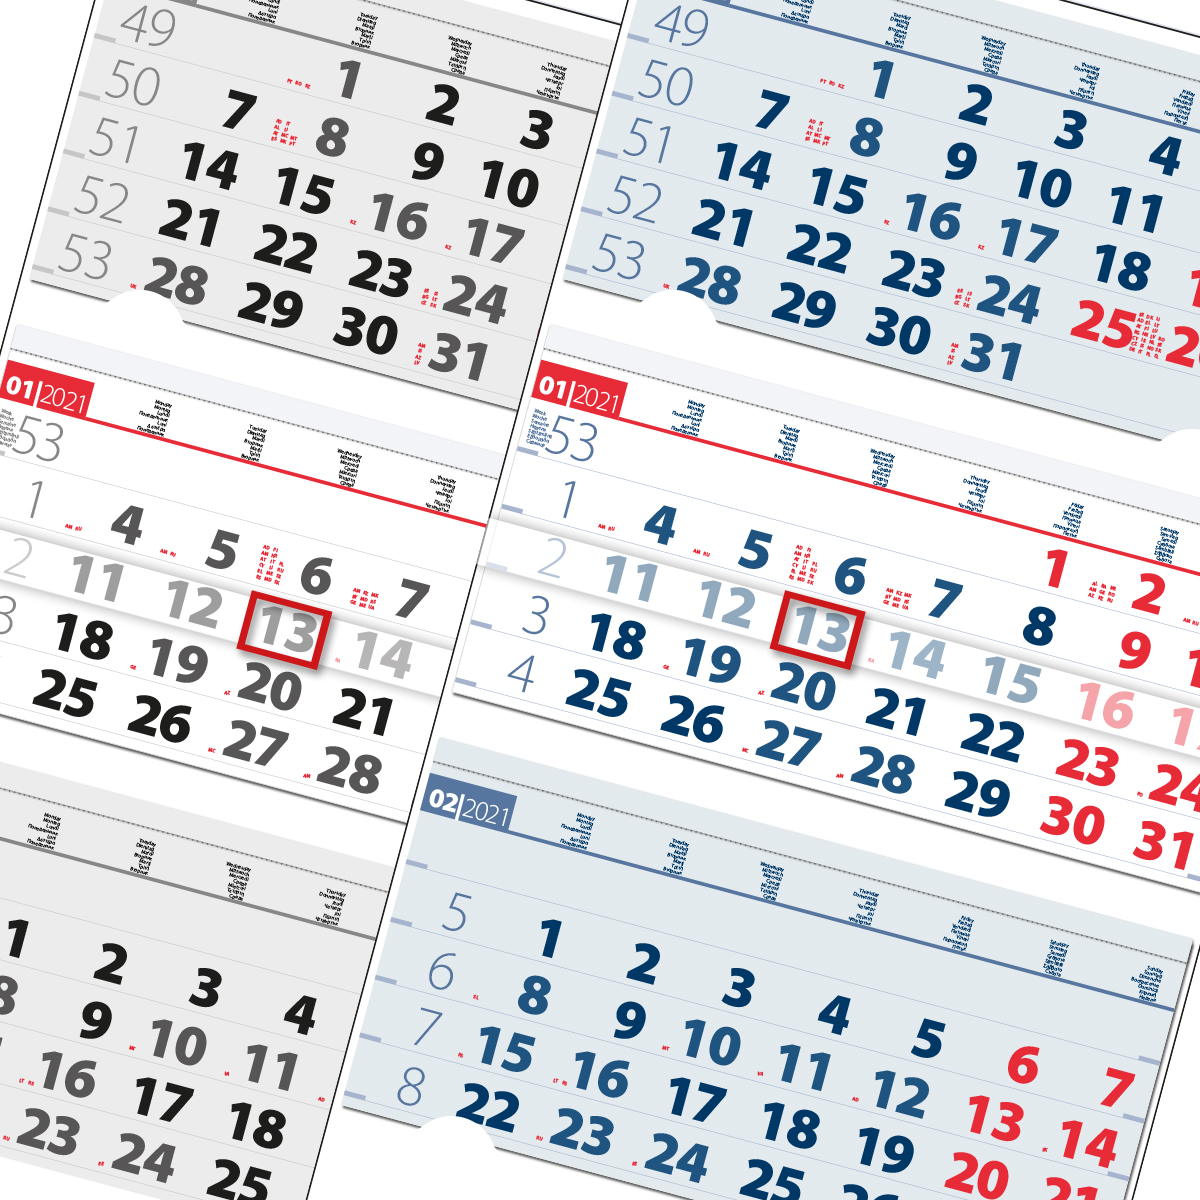 Календари 3 тела Елит, 3 monat Werbekalender, 3 month calendars Ellite,